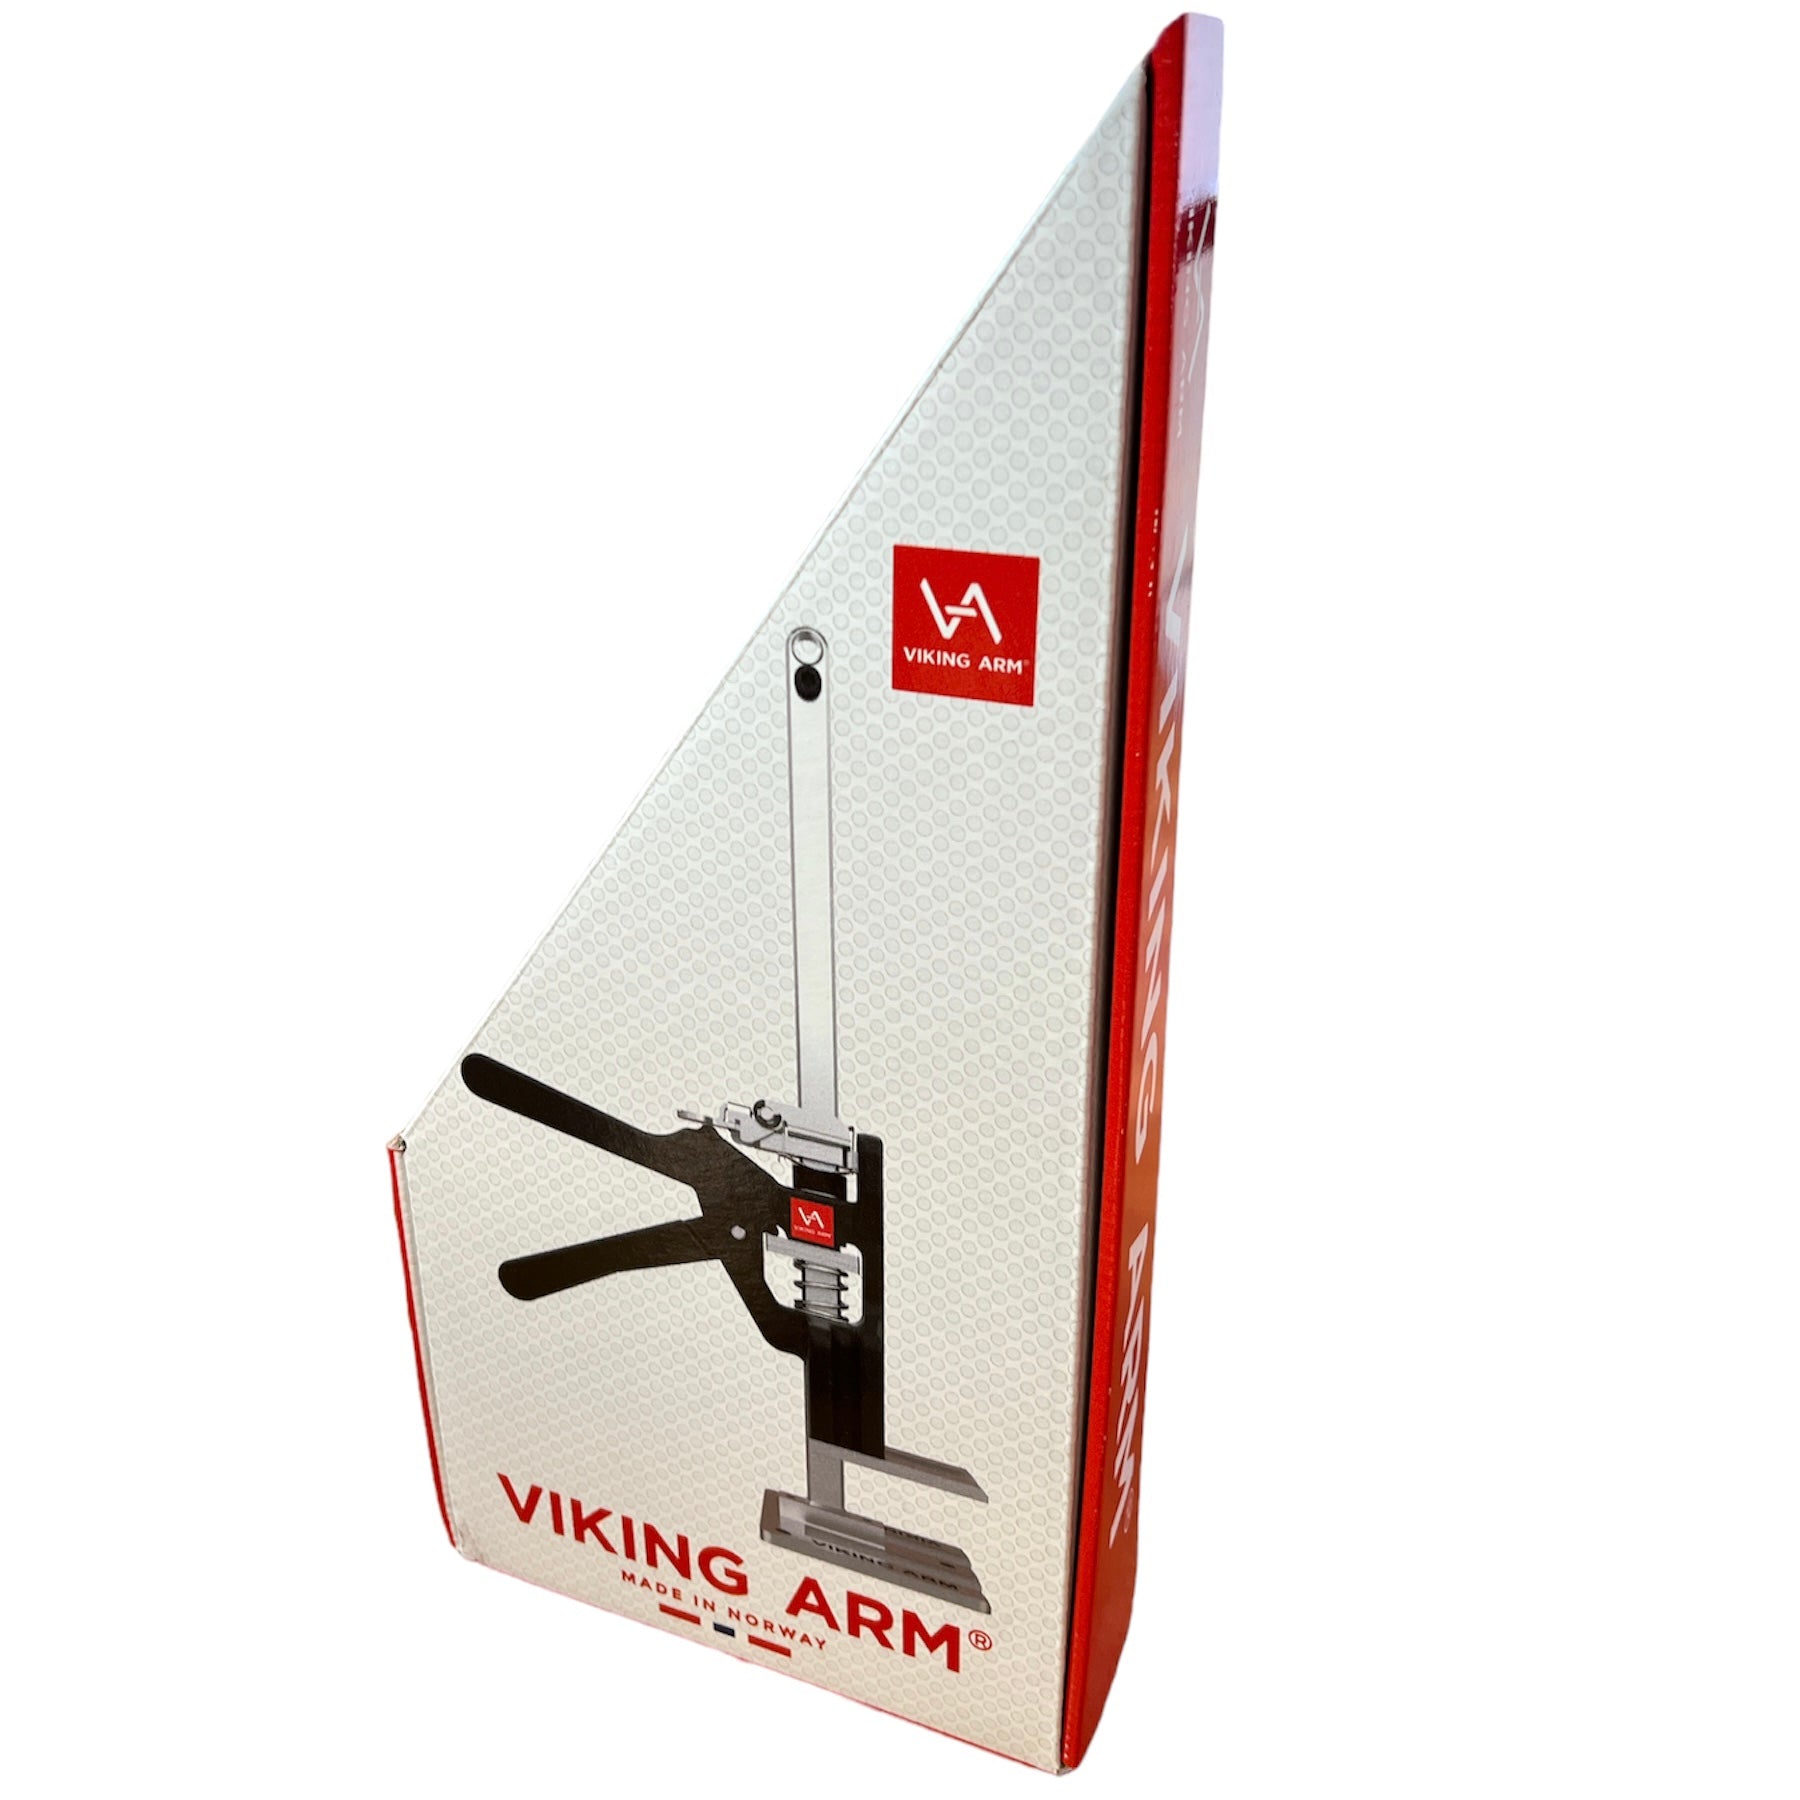 Reviews for VIKING ARM Viking Arm Handheld Jack